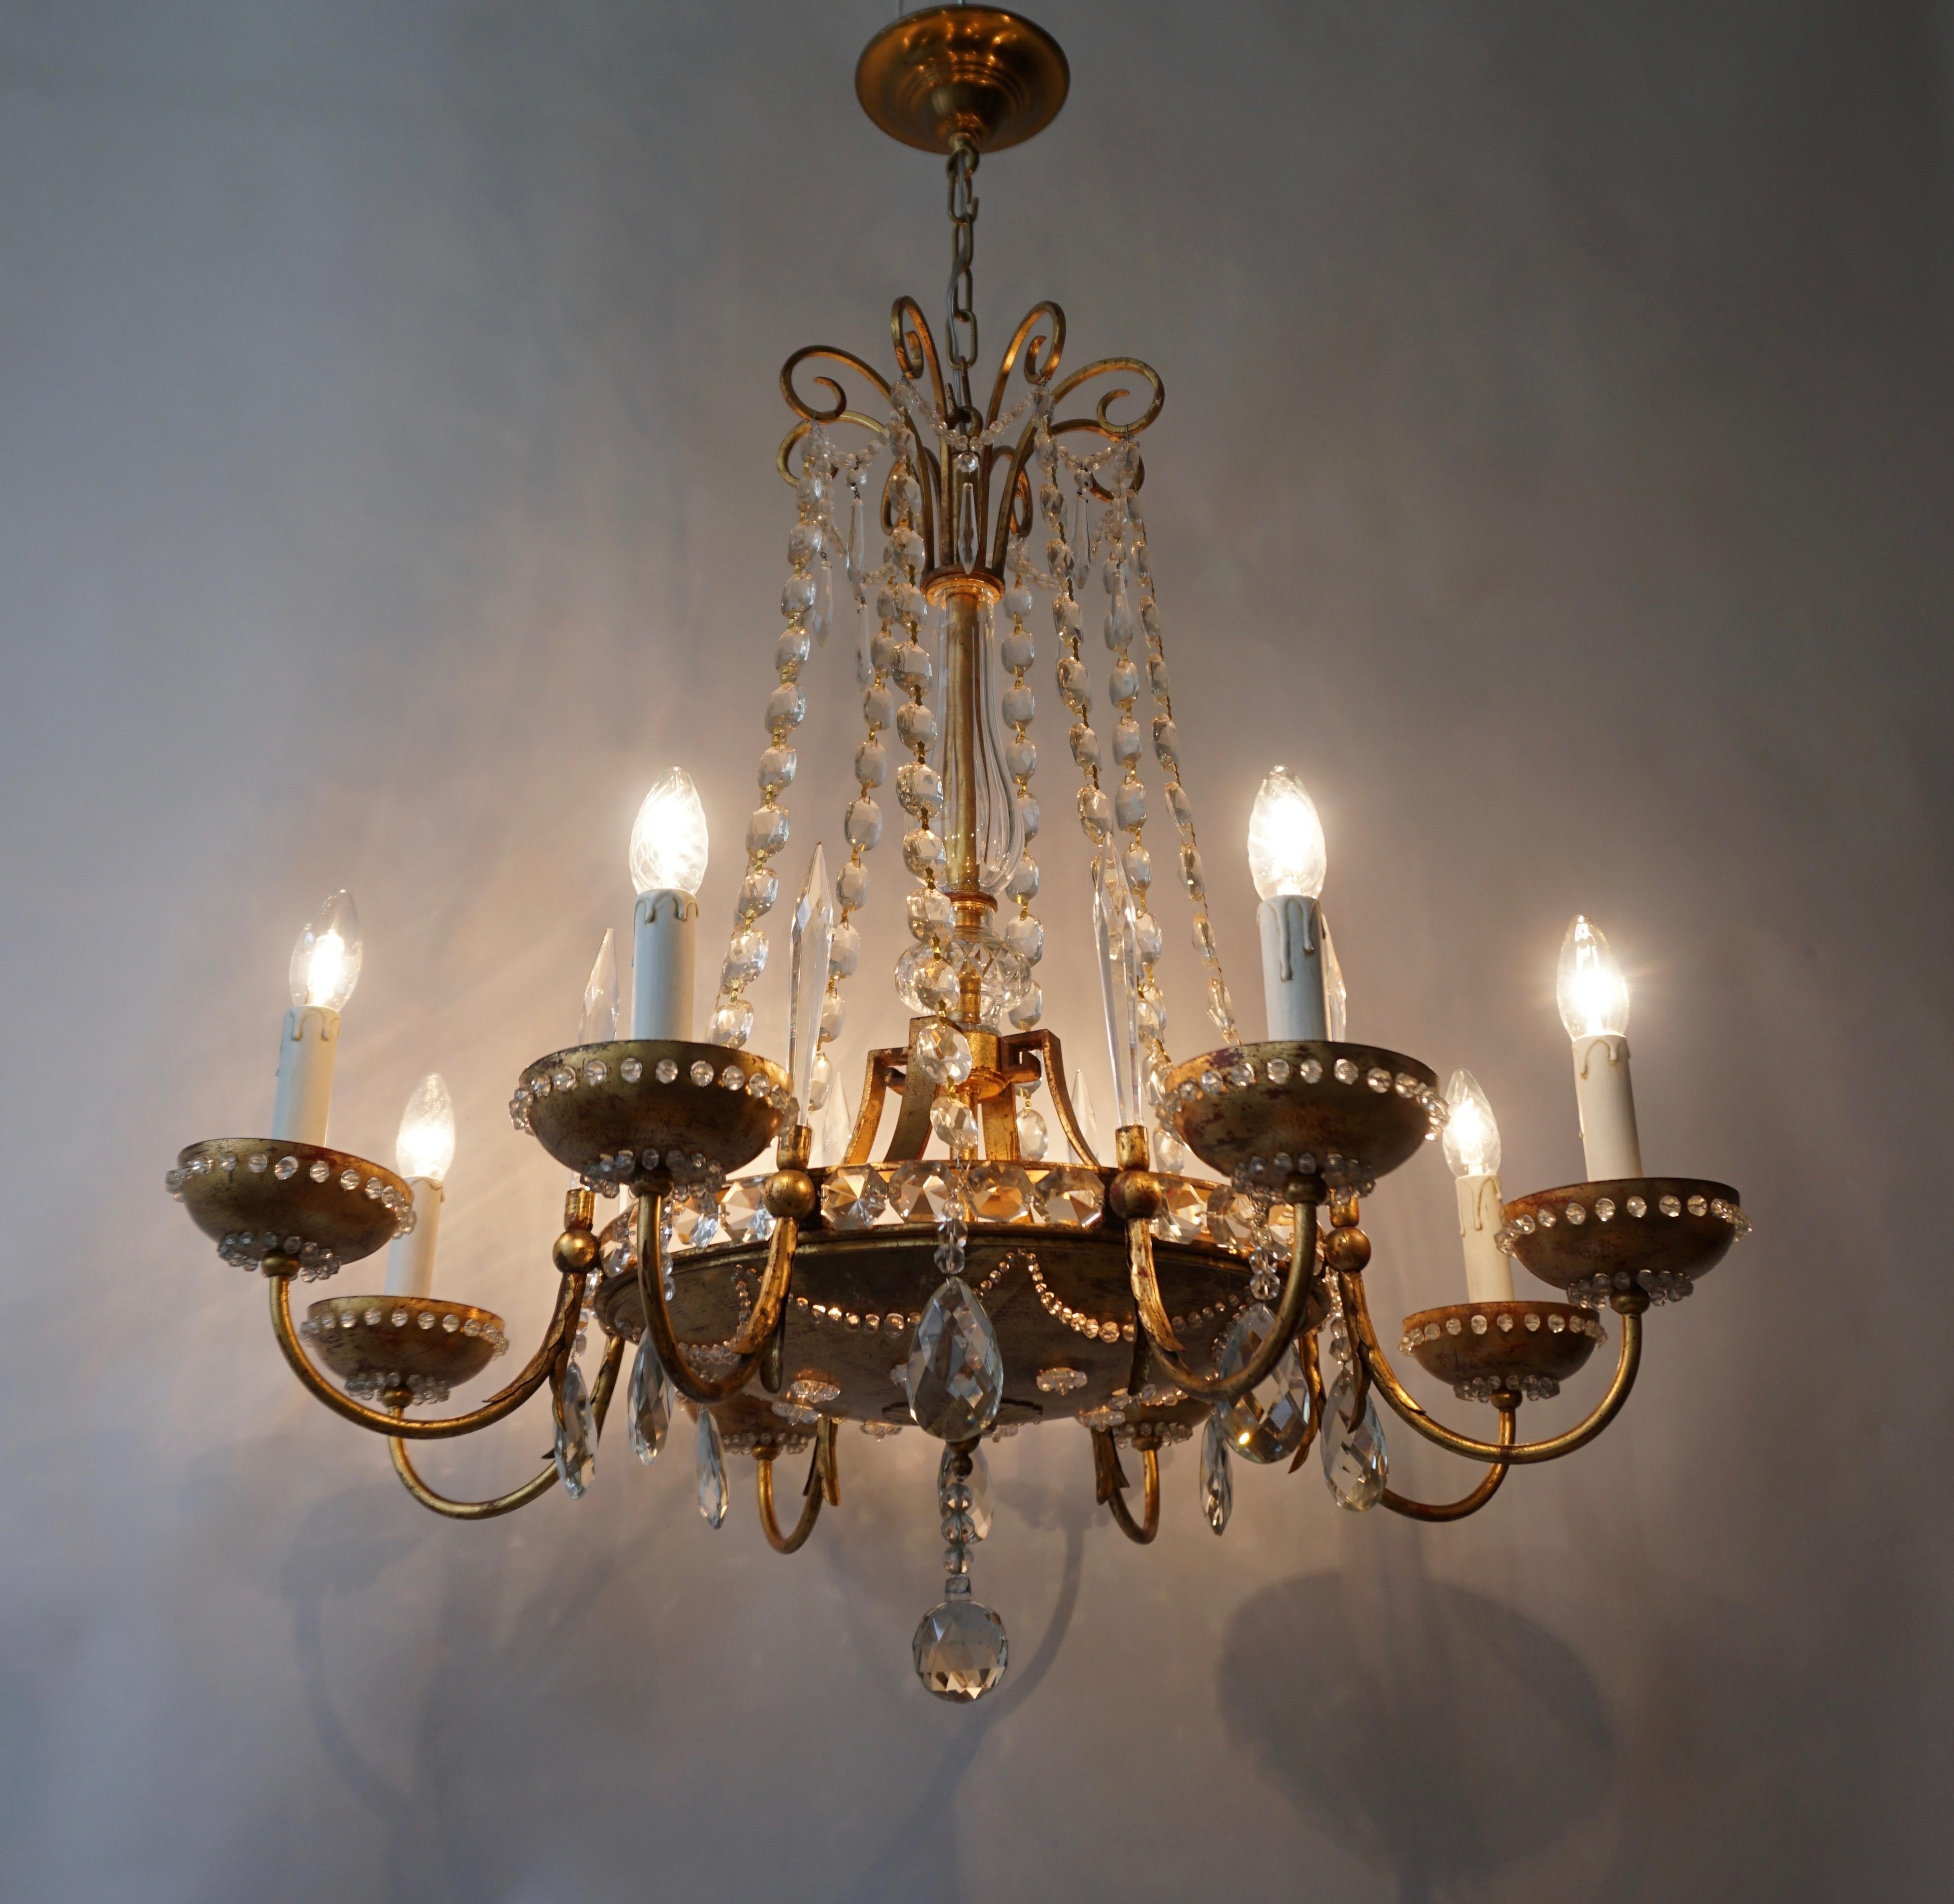 Large elegant Italian chandelier in brass and crystal.
Diameter 84 cm.
Height fixture 80 cm.
Total height 110 cm.
Four E27 bulbs.
Eight E14 bulbs.